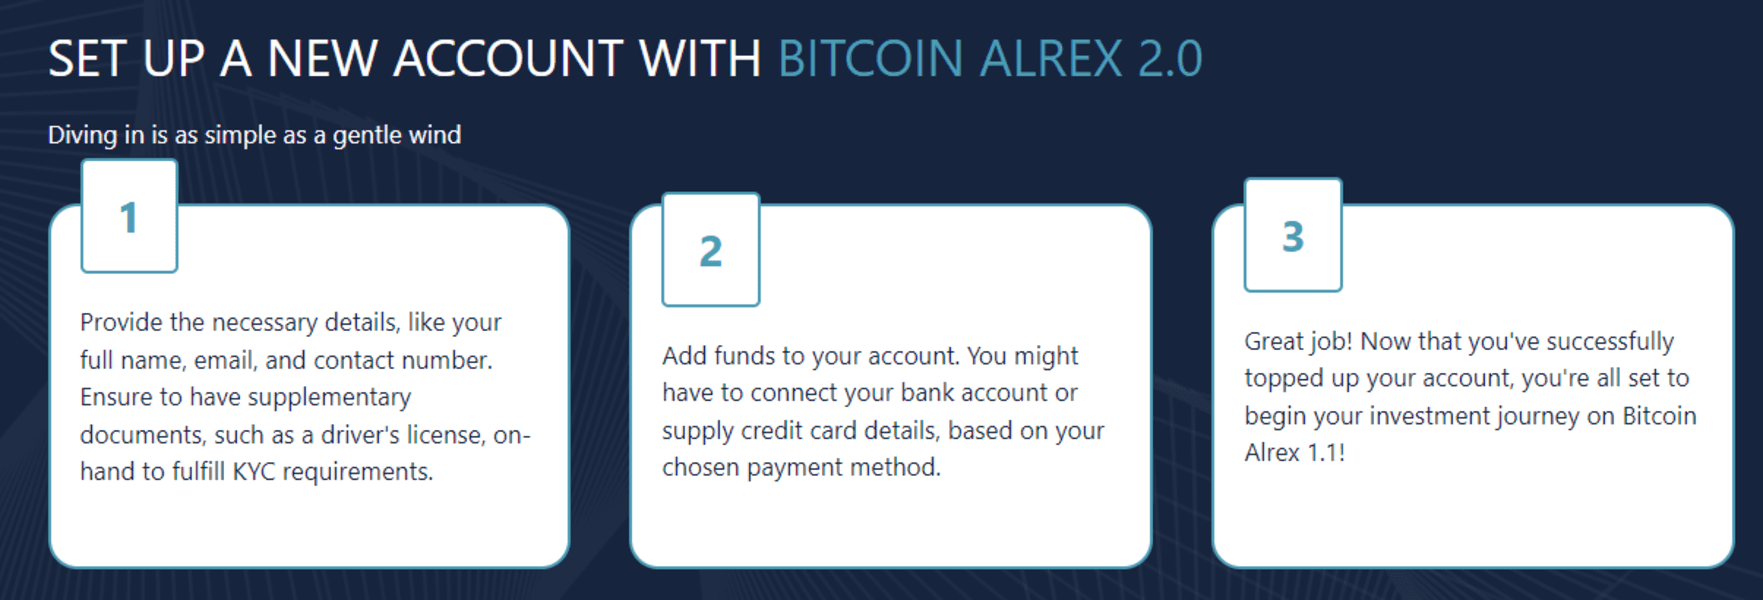 BTC Alrex App -Yfirlit